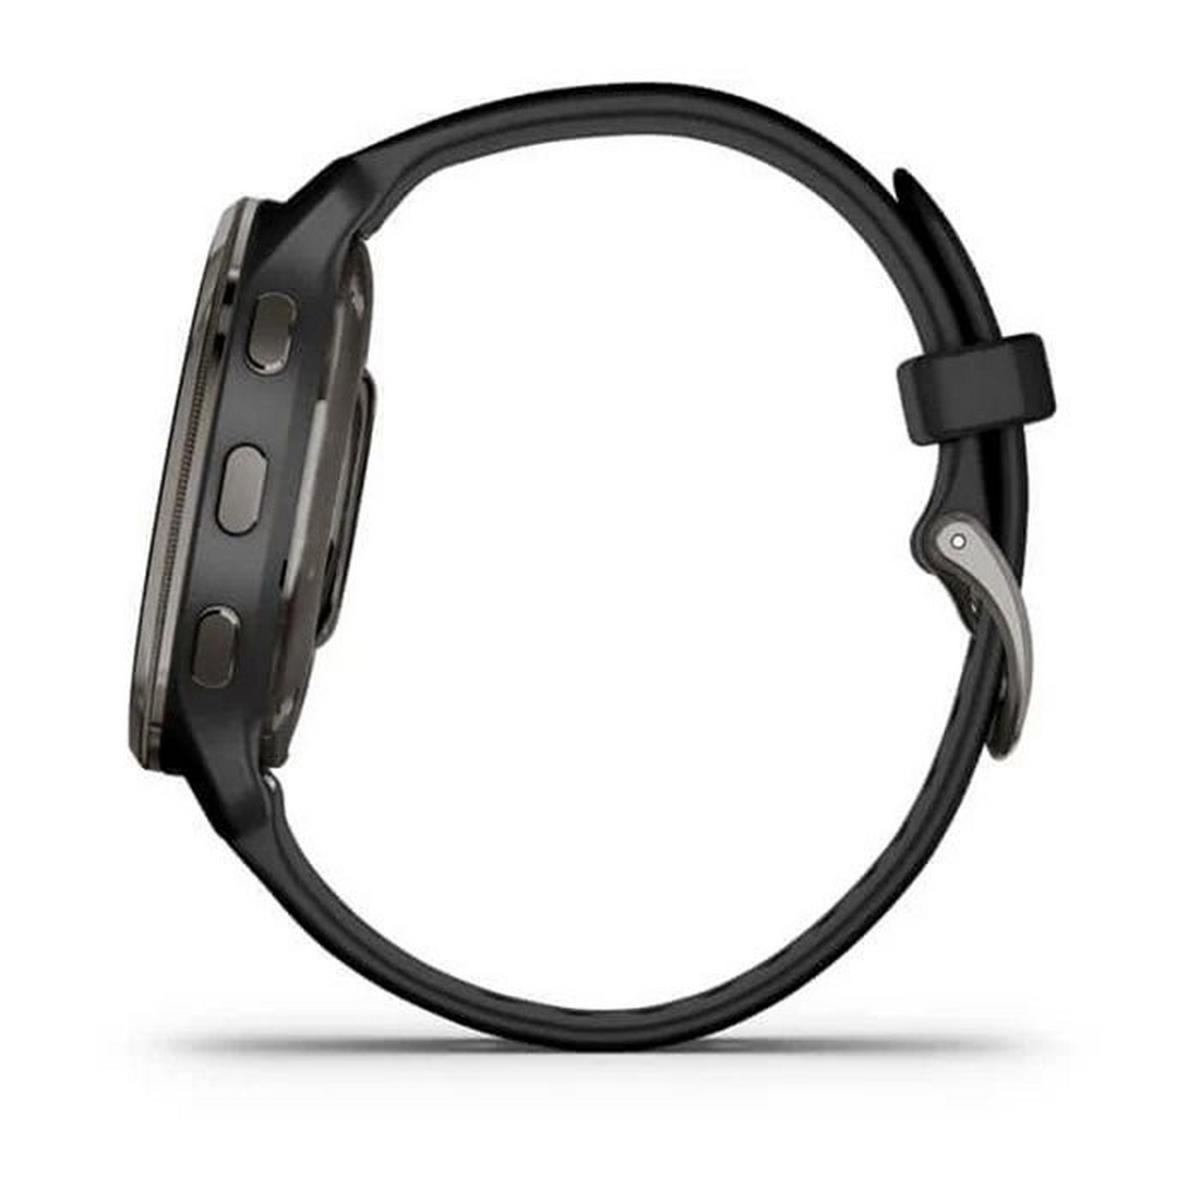 Venu® 2 Plus GPS Fitness Smartwatch